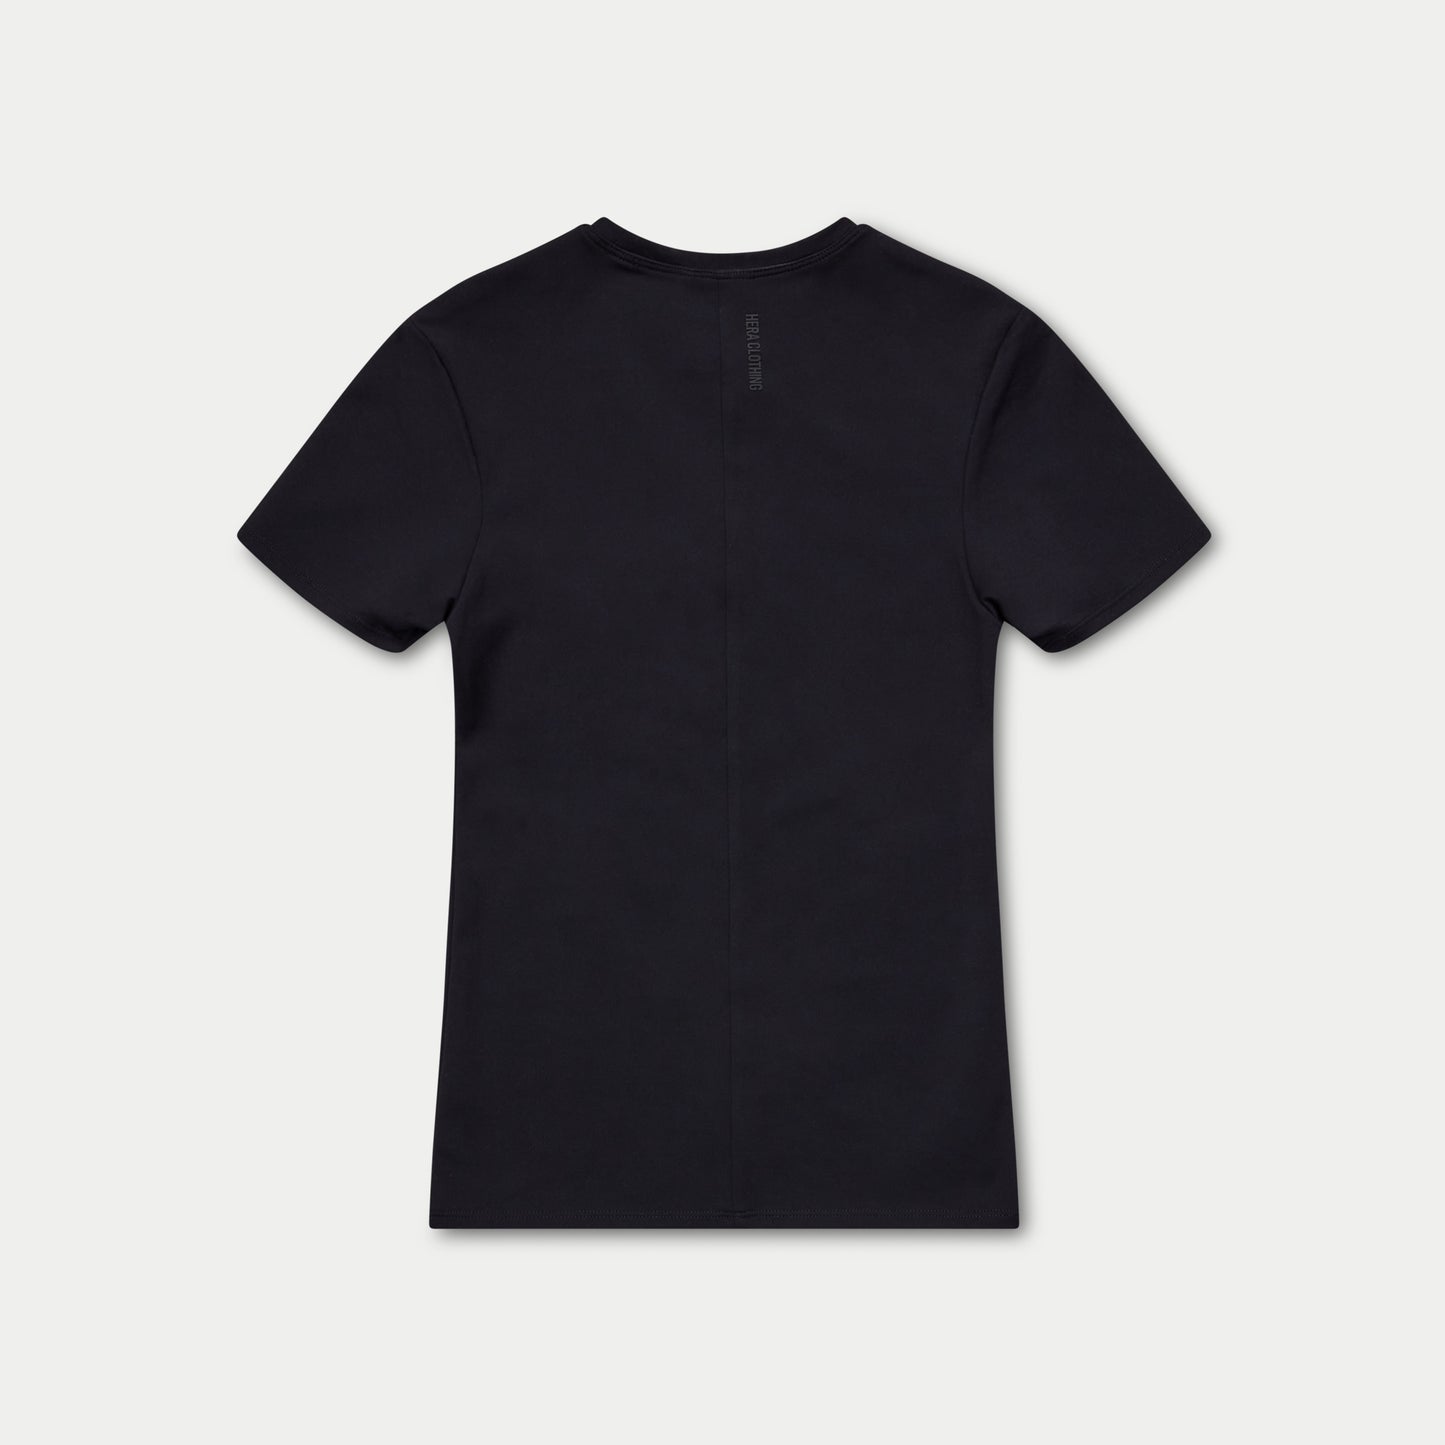 REWEAR Essential T-Shirt - Black